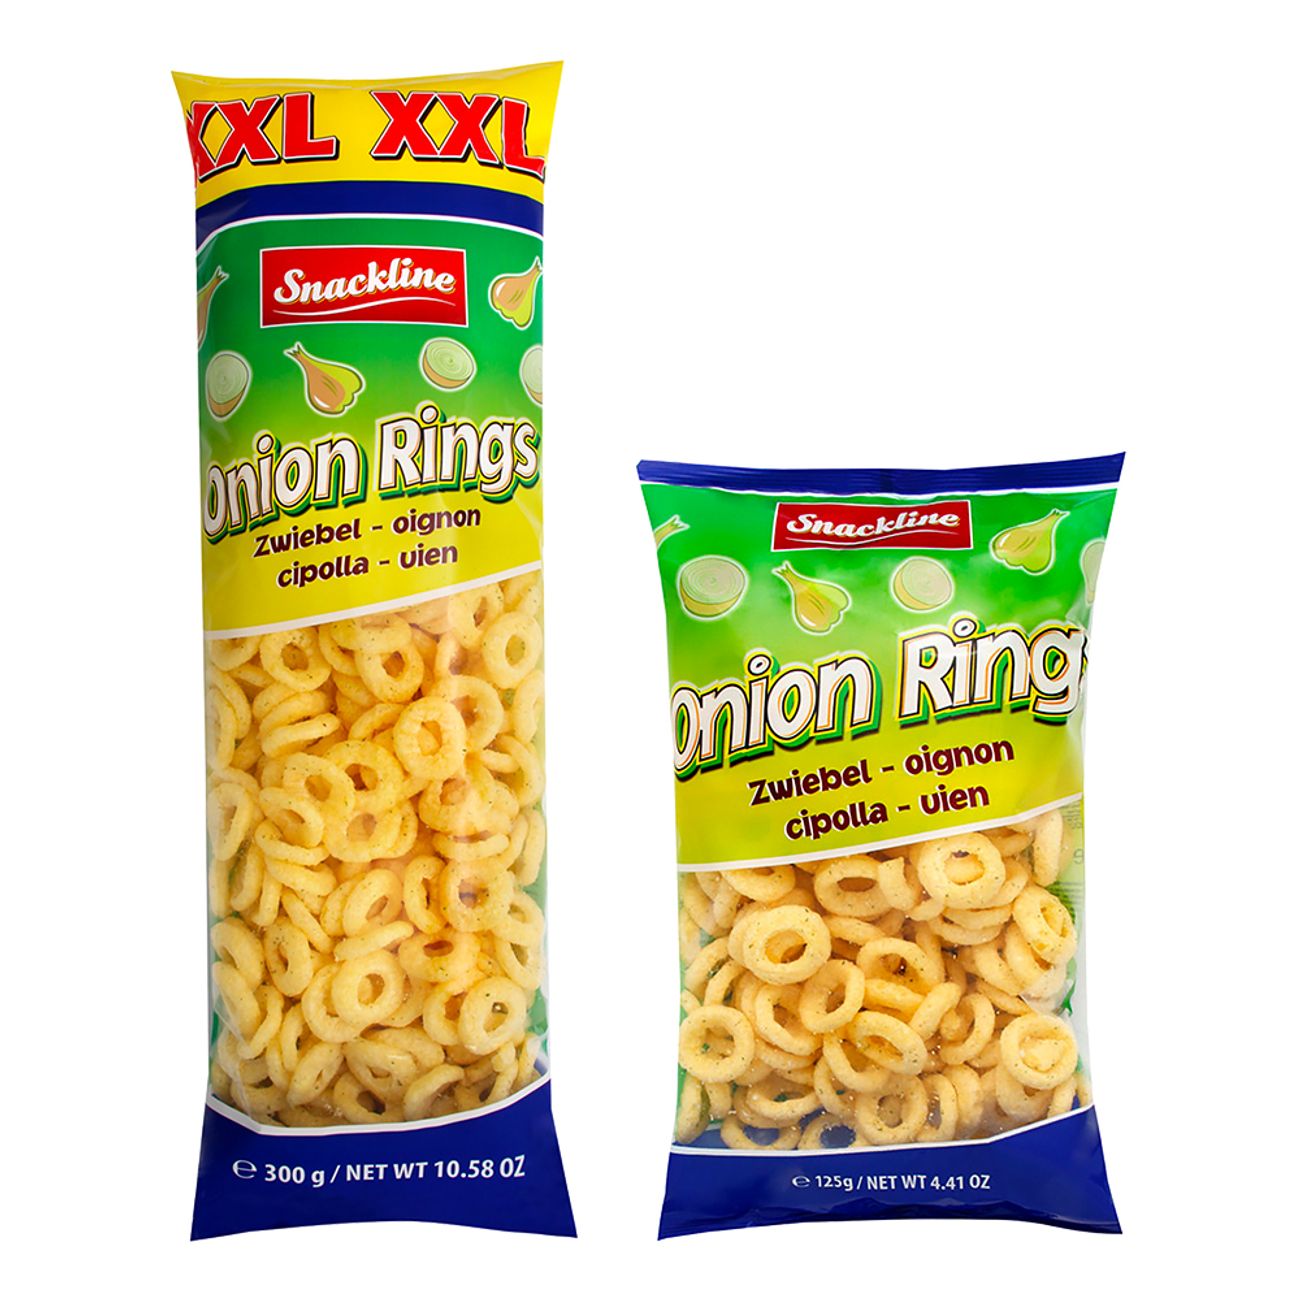 snackline-onion-rings-86335-1